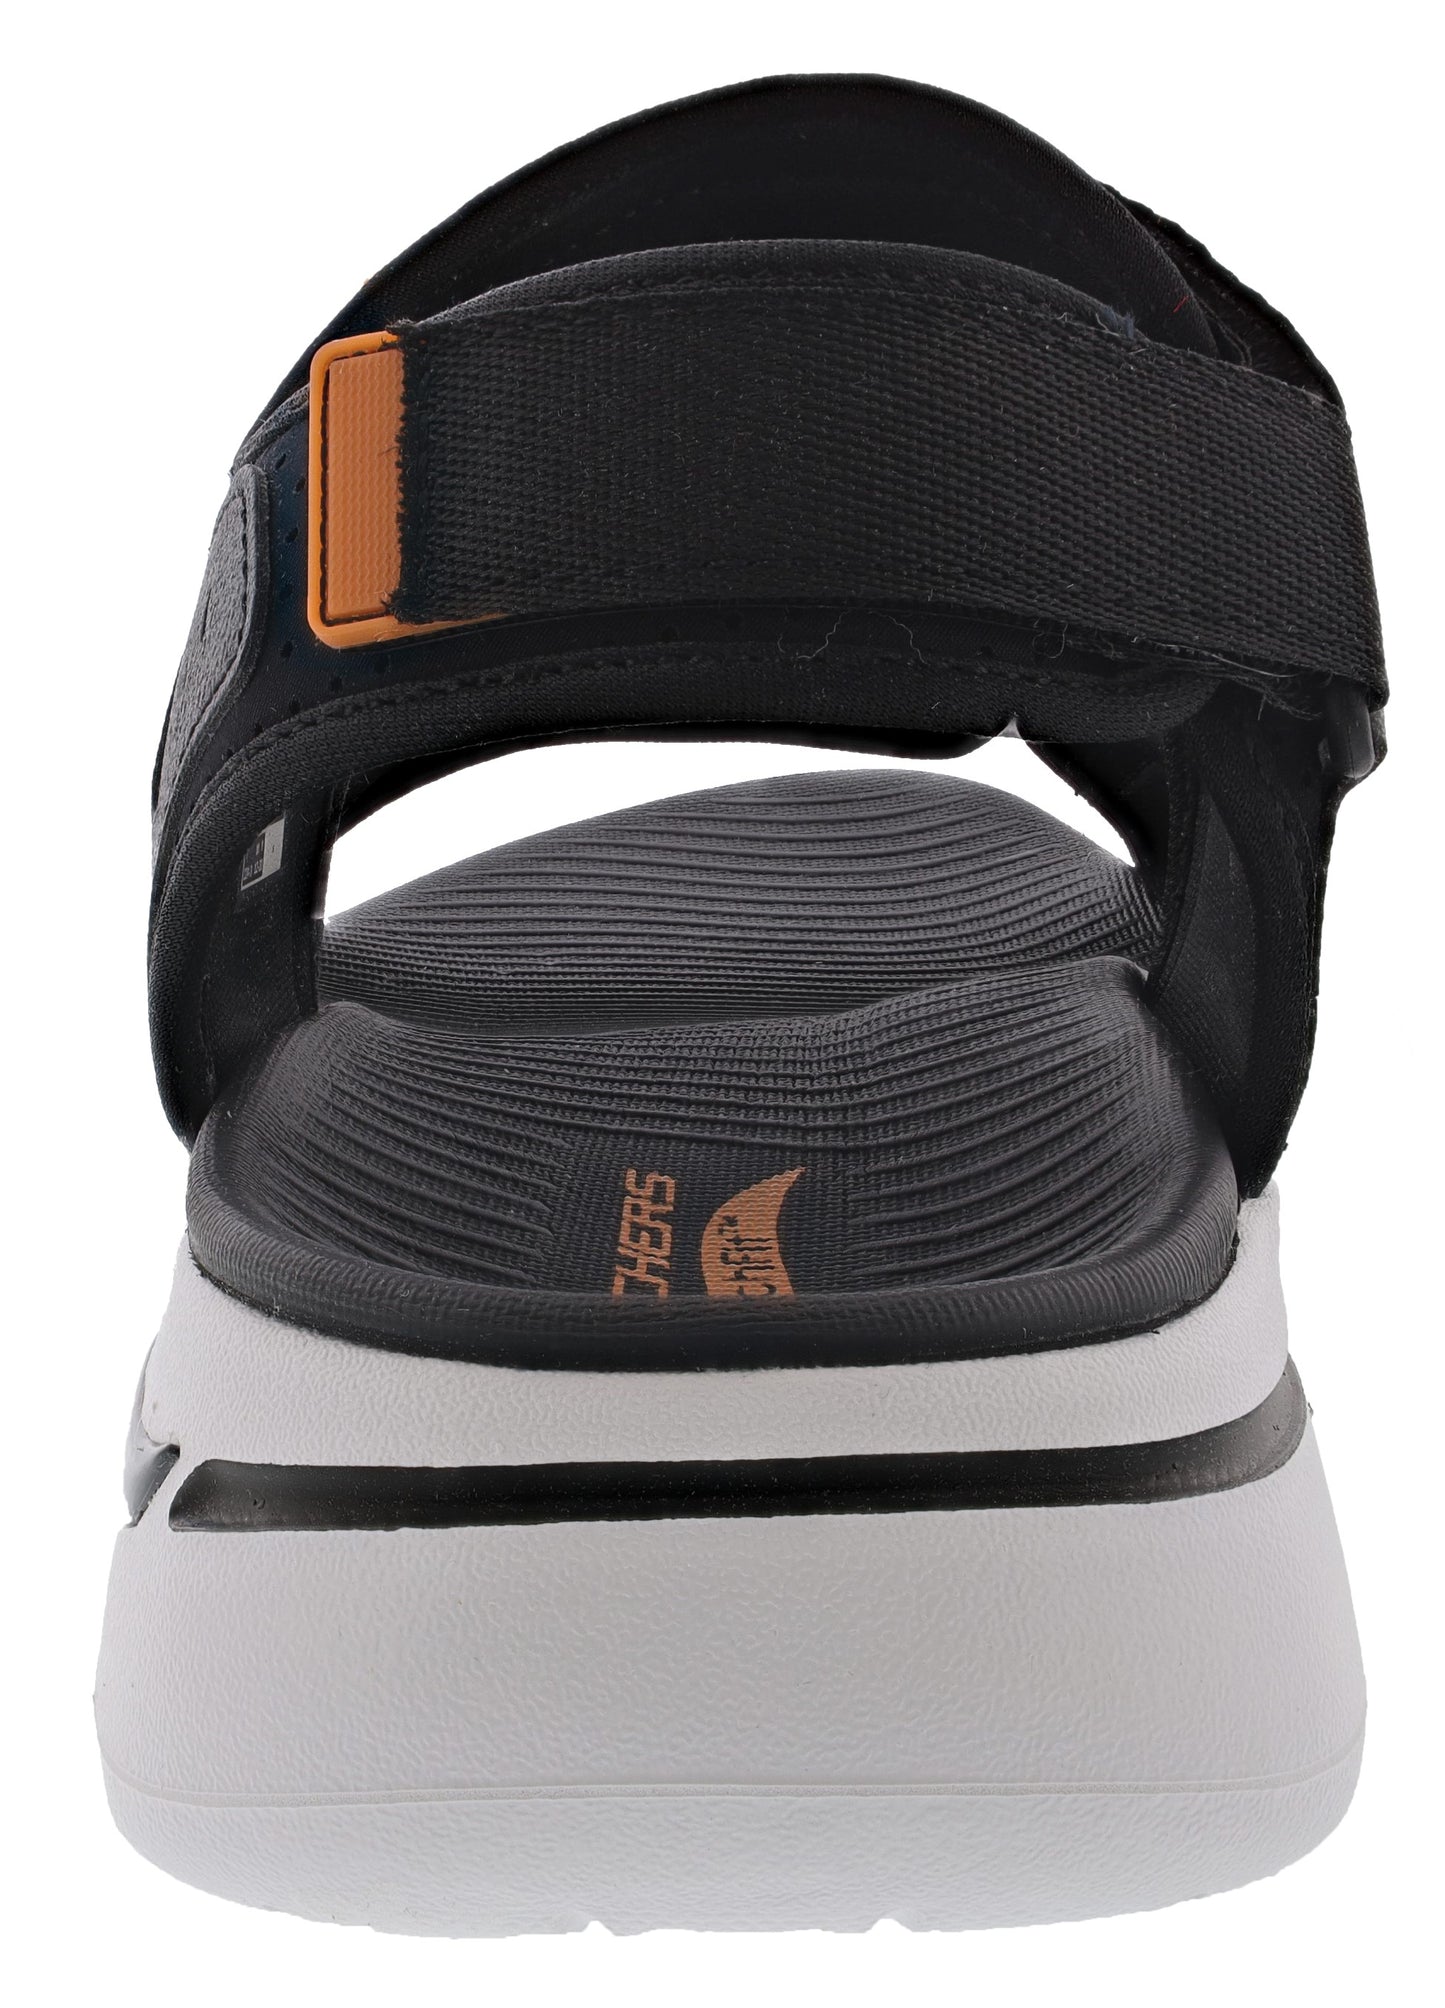 
                  
                    Skechers Men's Go Walk Arch Fit Sandal Adjustable Outdoor Sandals
                  
                